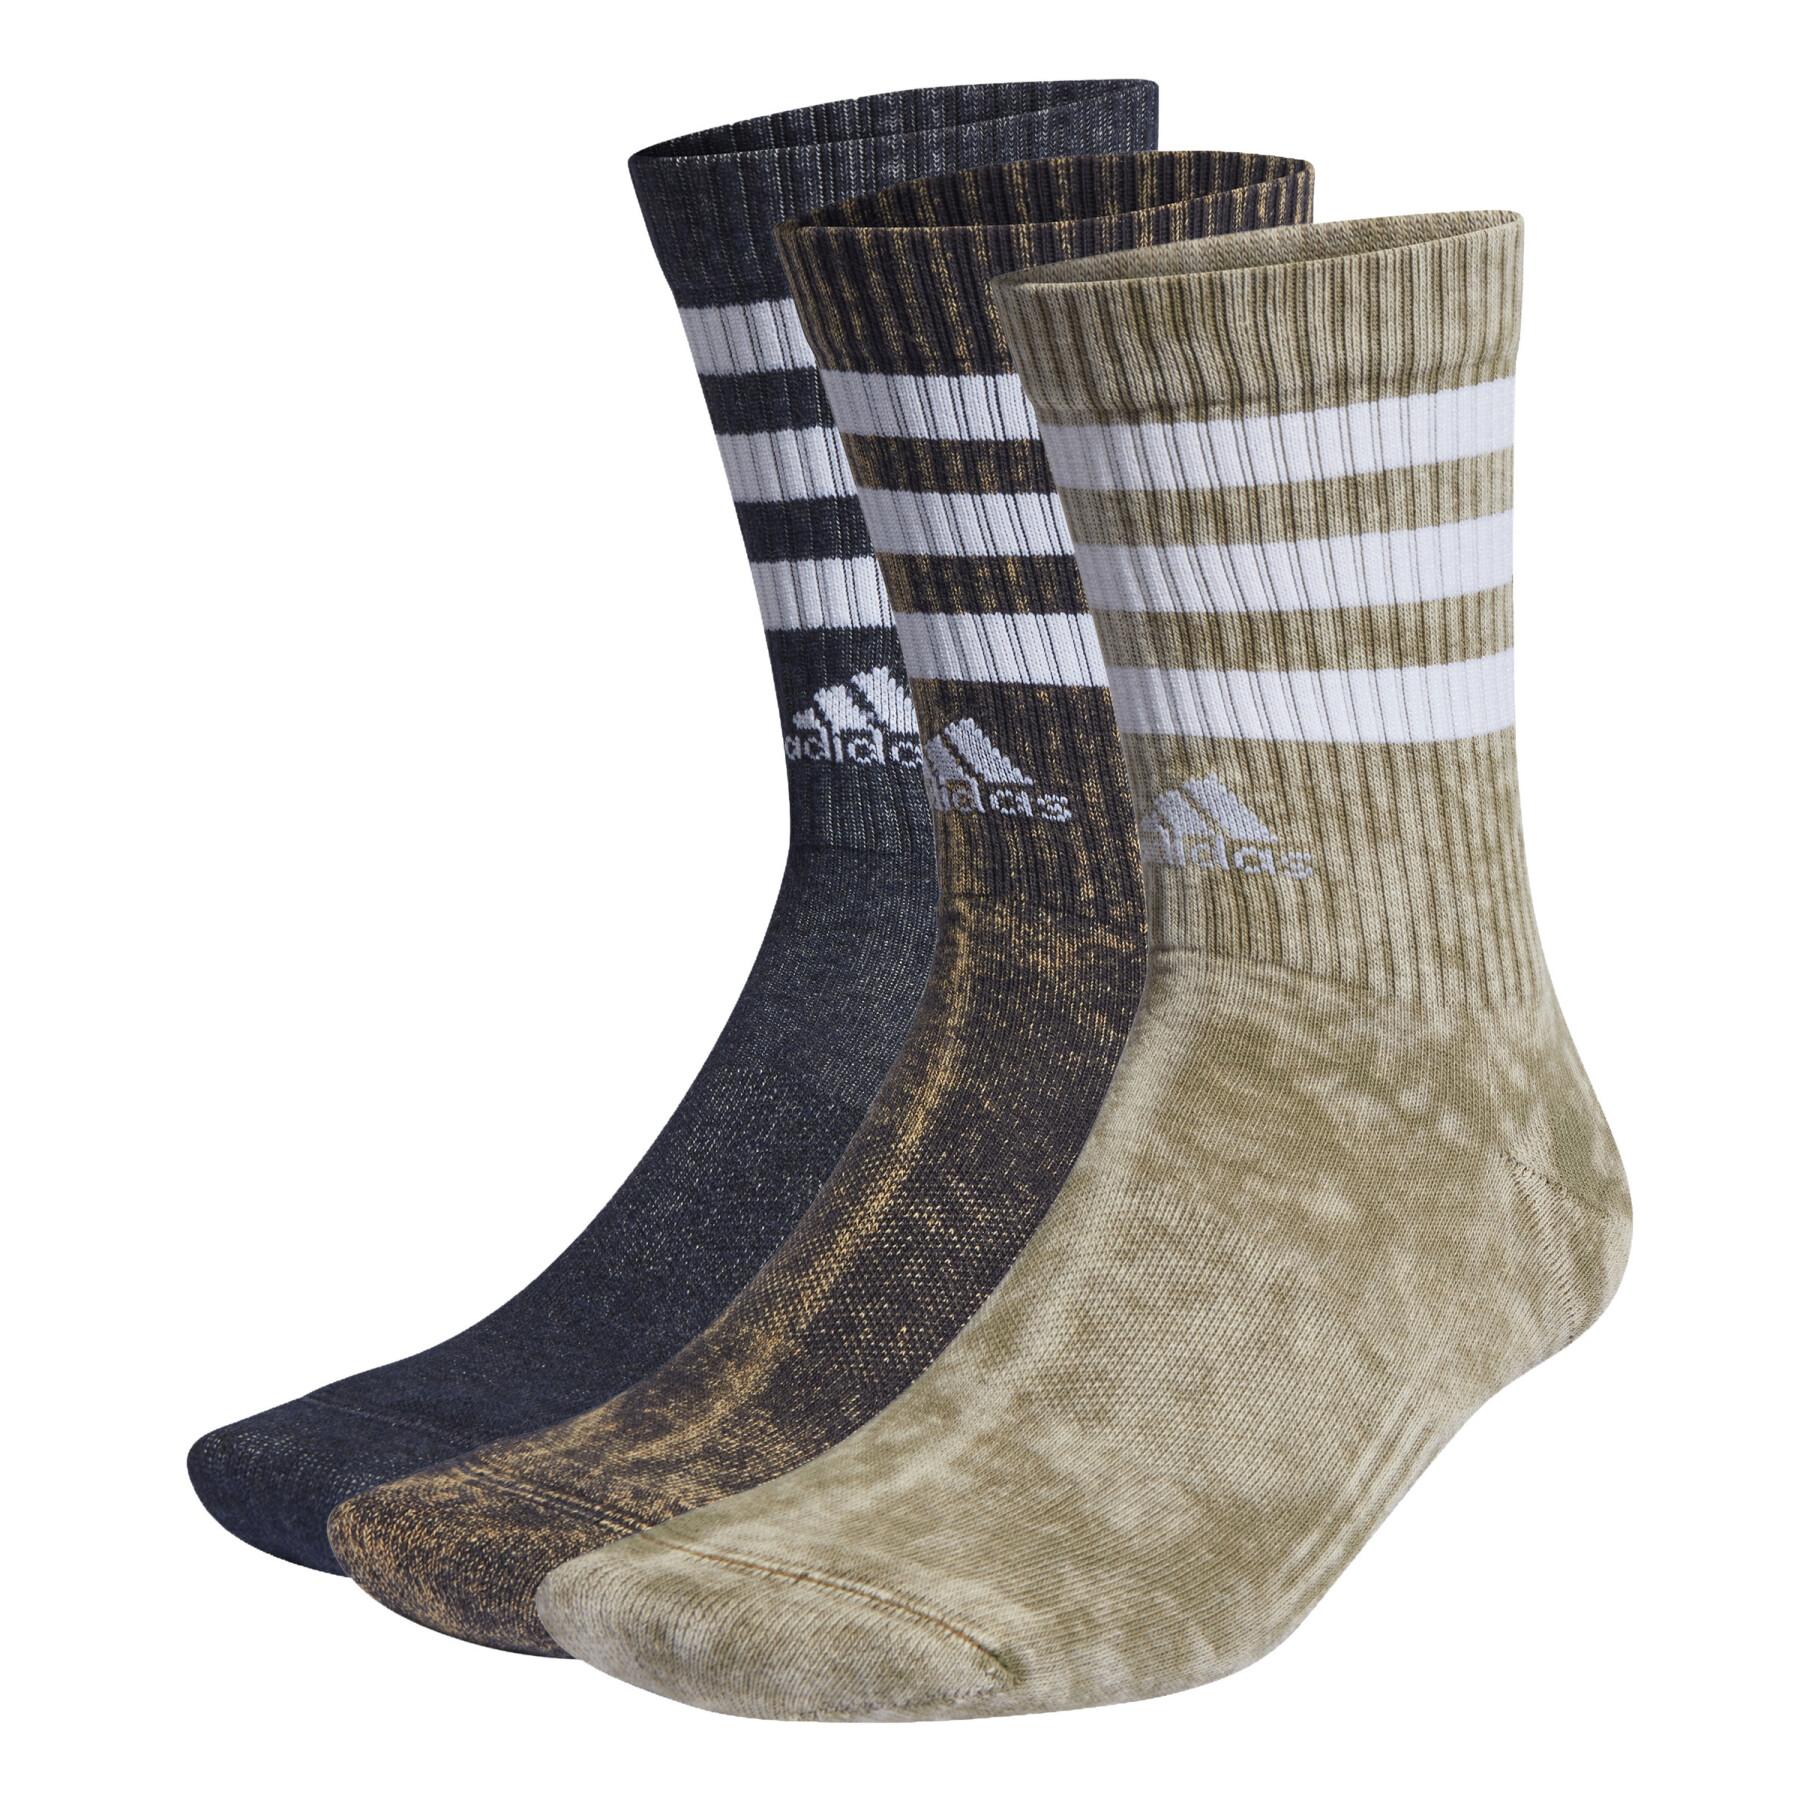 Children's mid-calf socks adidas 3-Stripes Stonewash (x3)